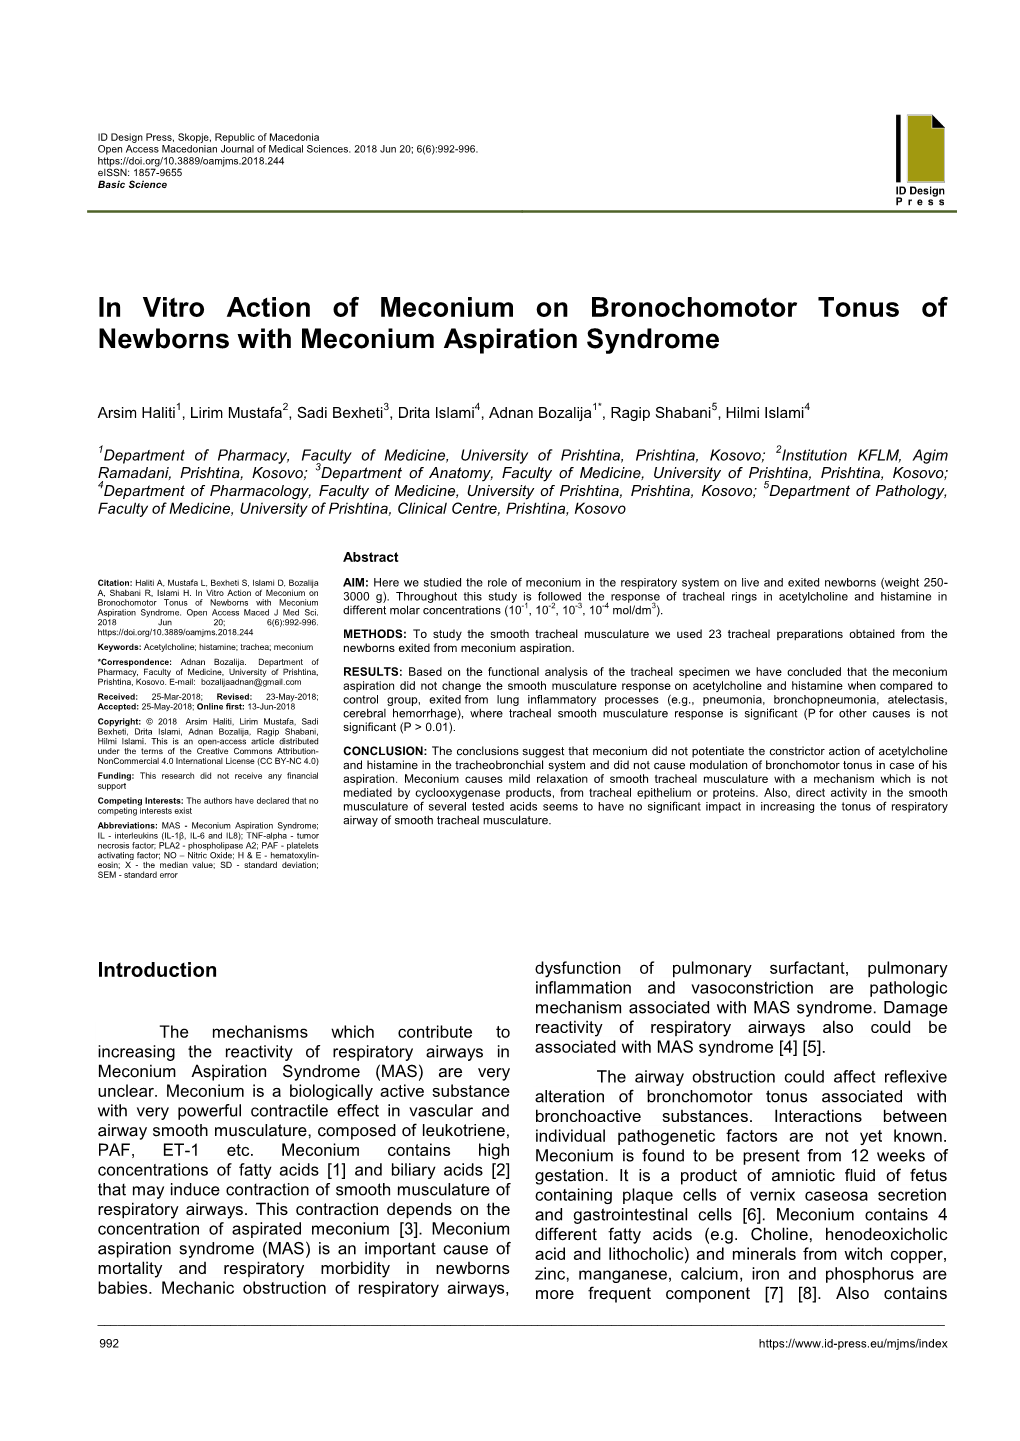 In Vitro Action of Meconium on Bronochomotor Tonus of Newborns with Meconium Aspiration Syndrome